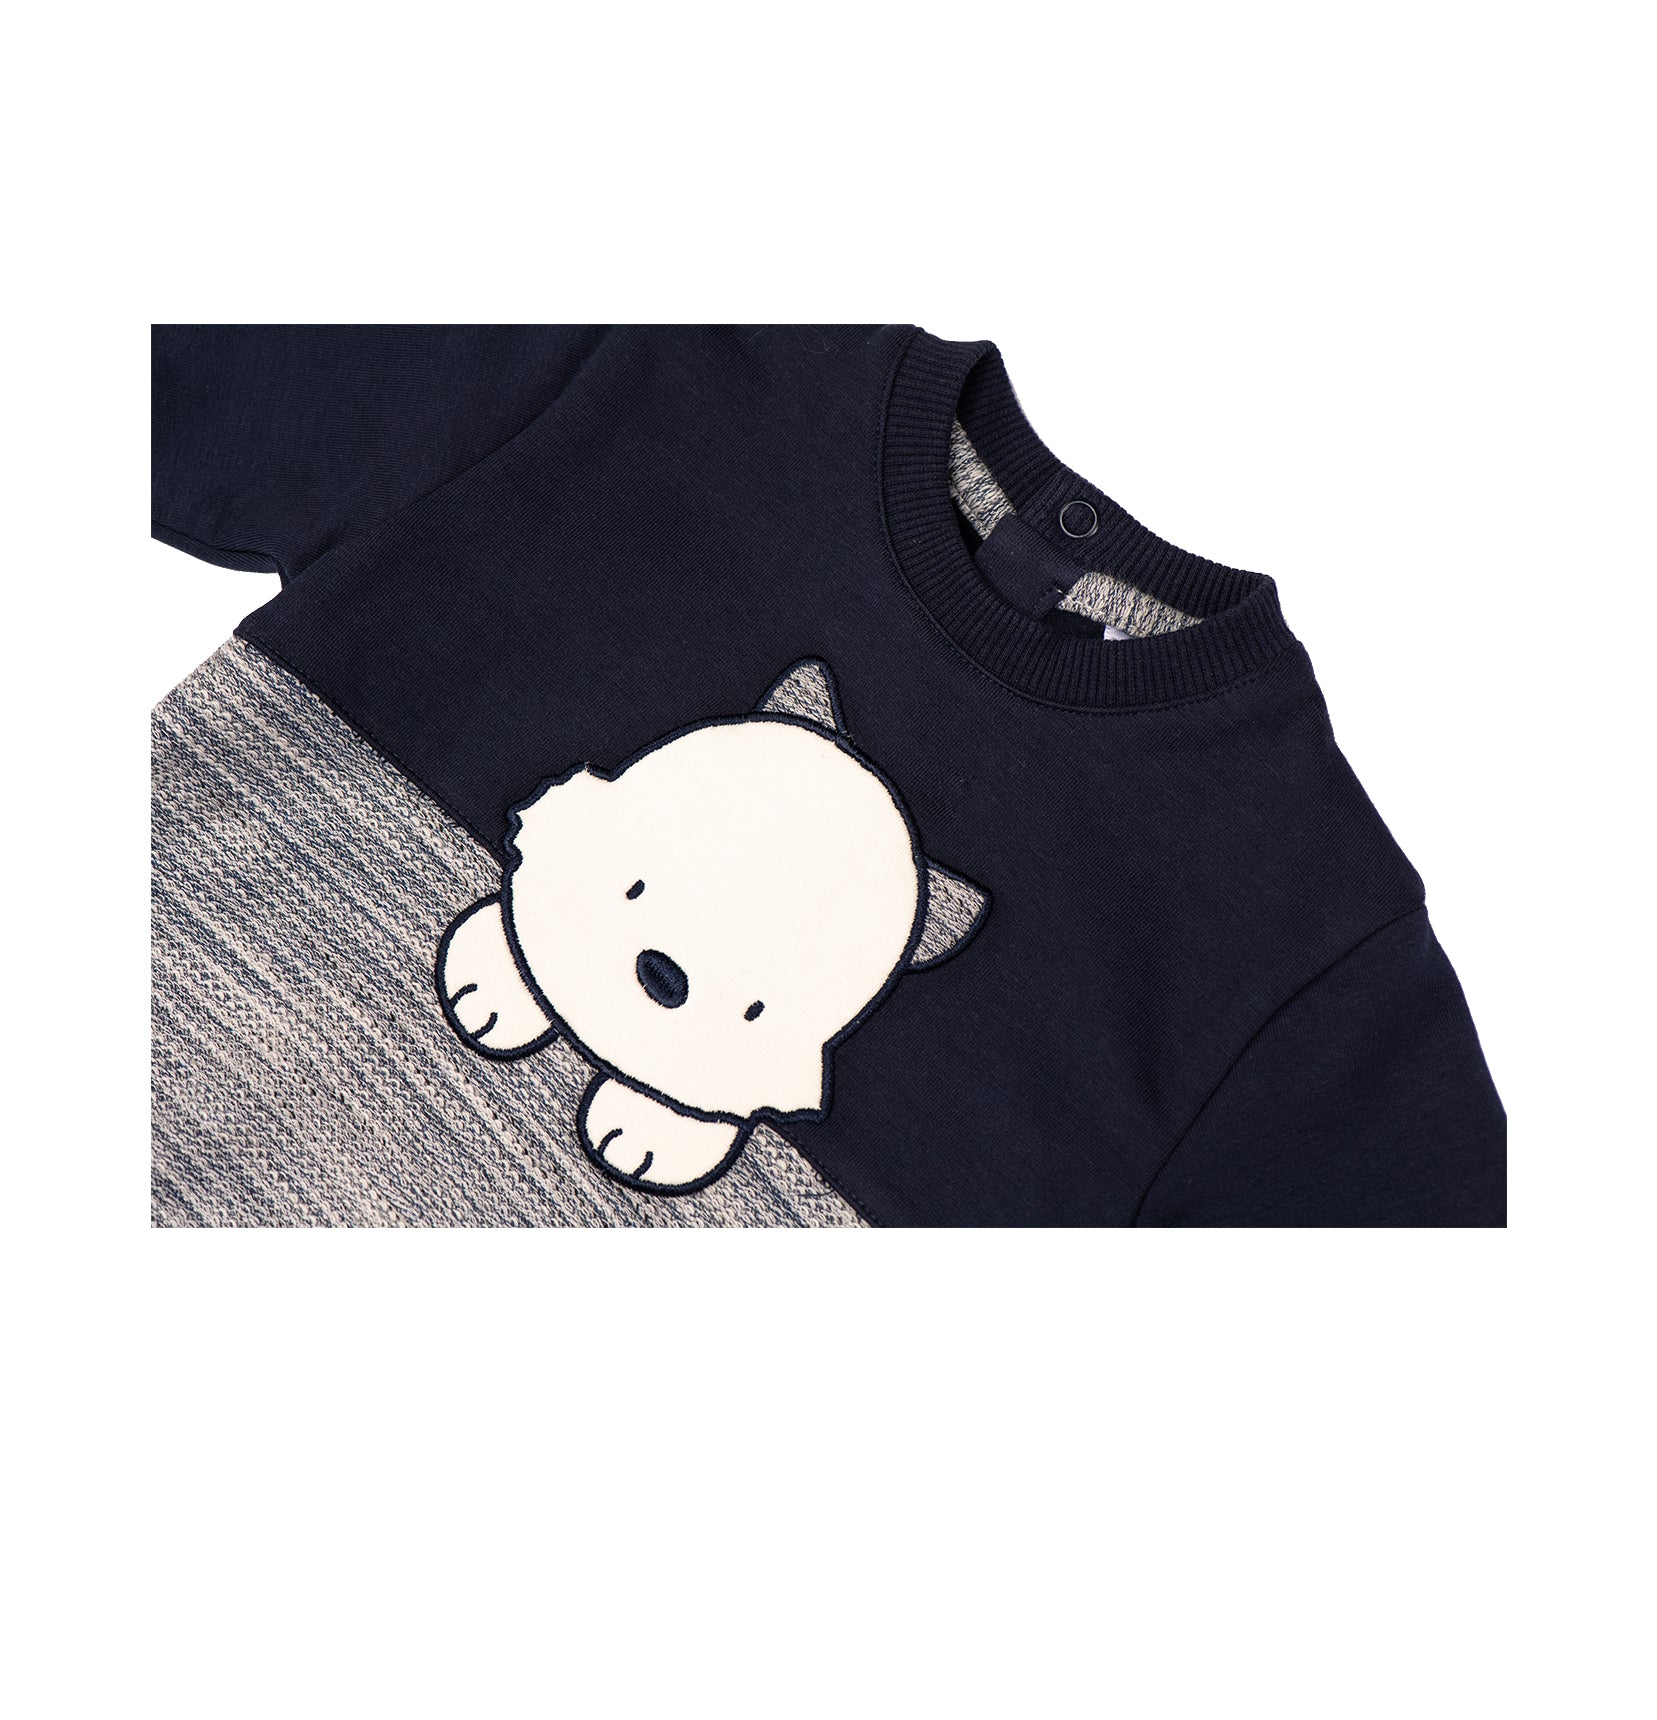 Cool Babyboy doggie sweatshirt by Pompelo